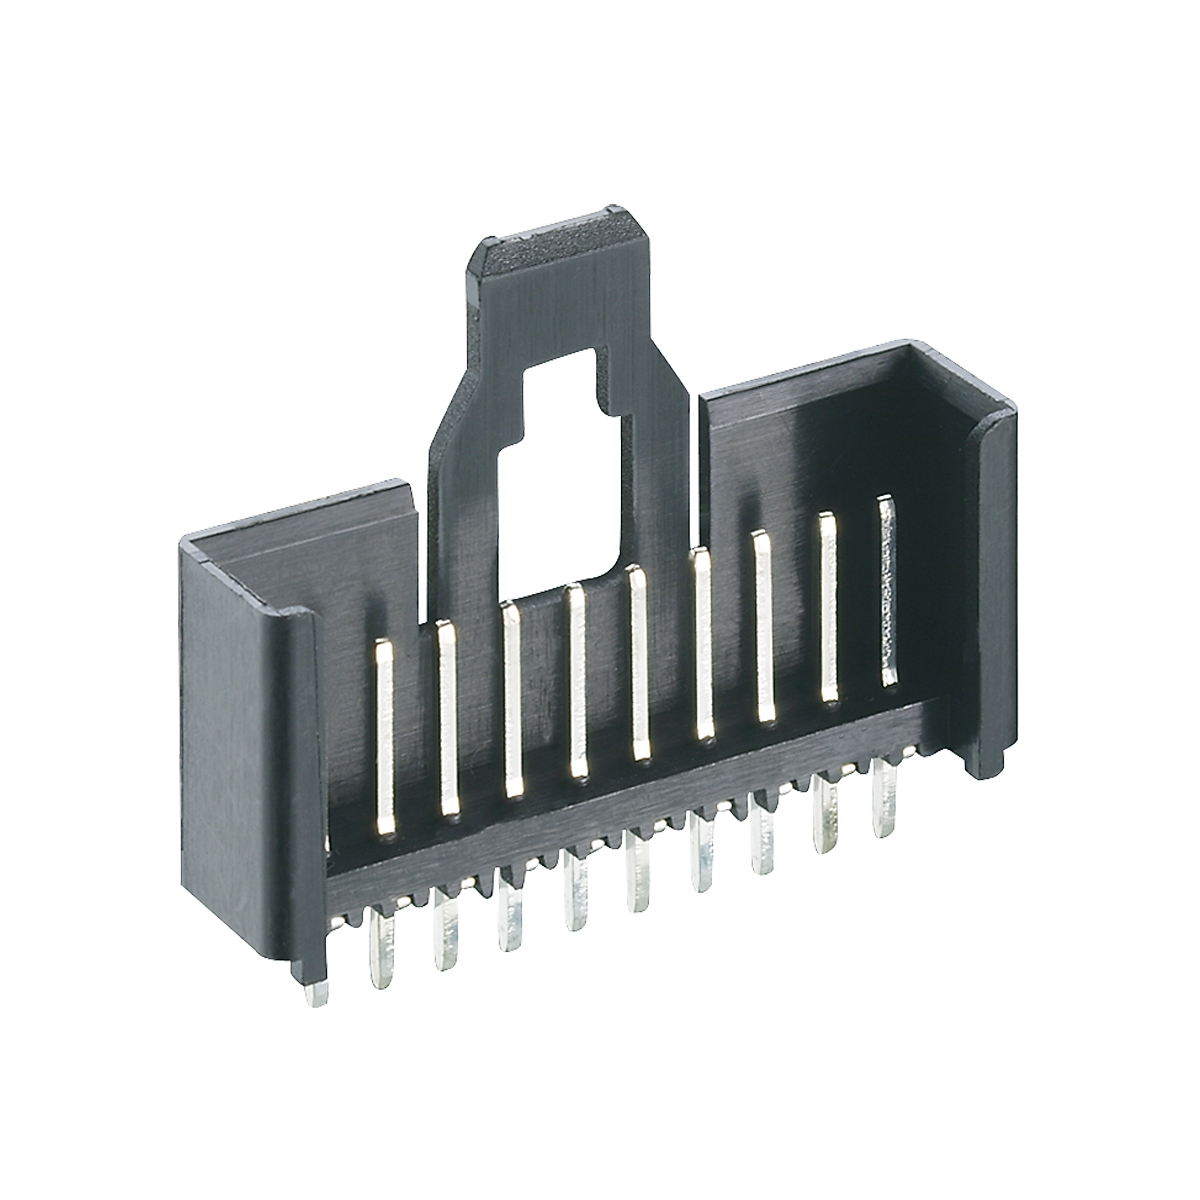 Lumberg: 2,5 MSF (Series 31 | Minimodul™ connectors, pitch 2.5 mm)